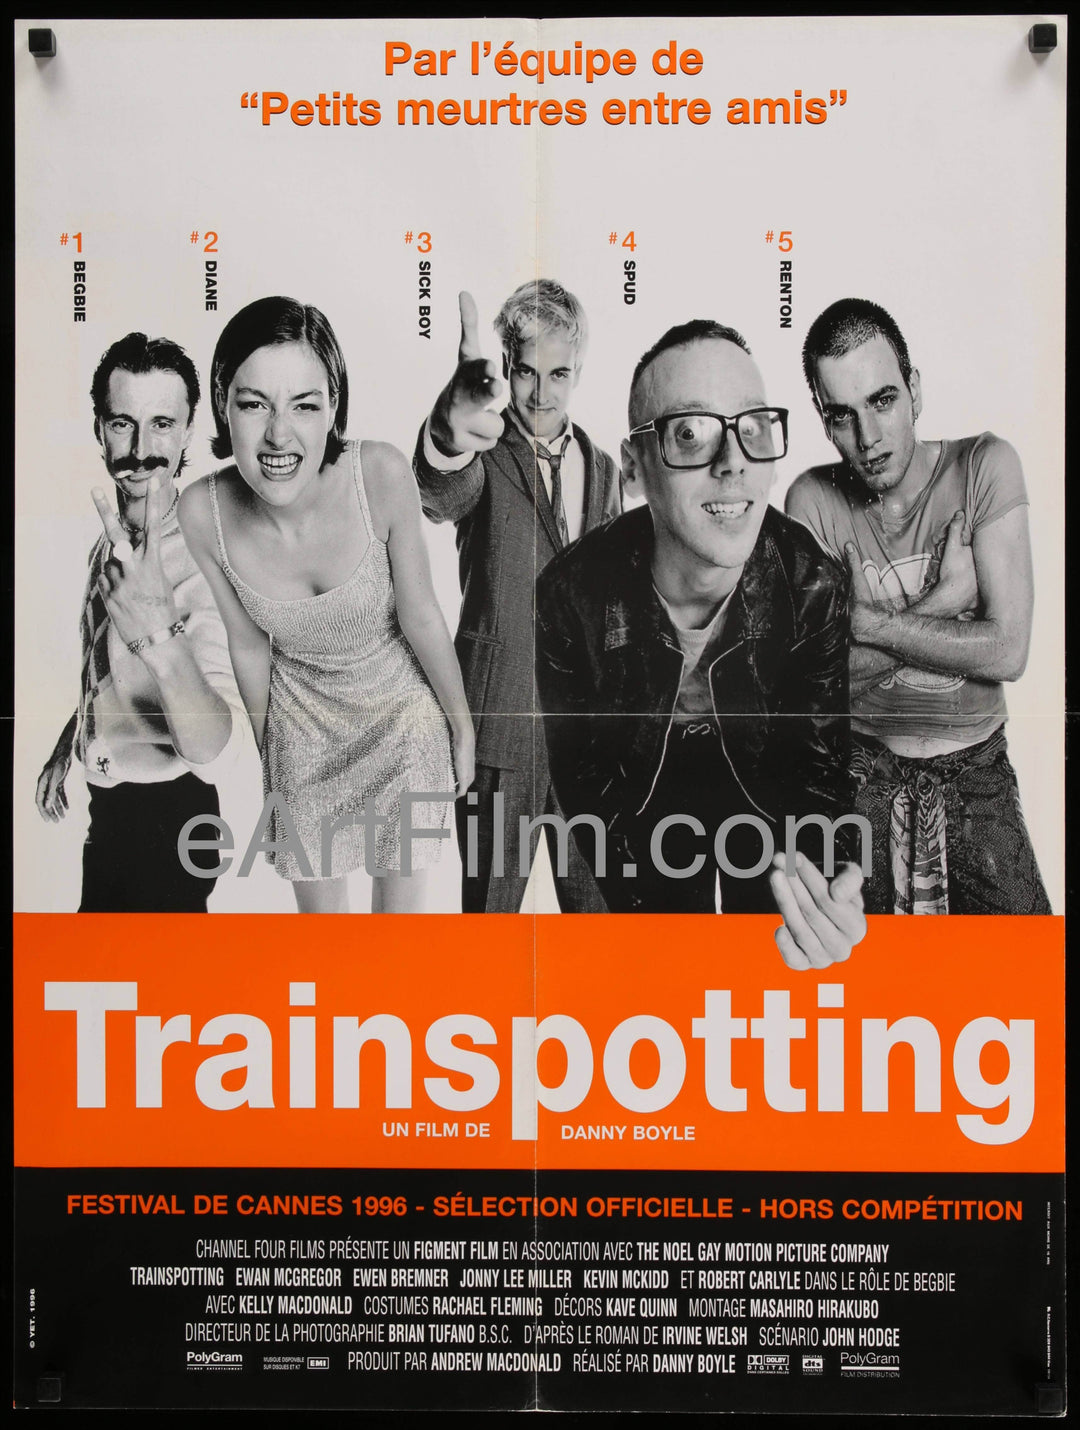 eArtFilm.com French Affiche Movie Poster (24"x31") Trainspotting-Danny Boyle, Ewan McGregor, Jonny Lee Miller, Robert Carlyle 1996-Affiche